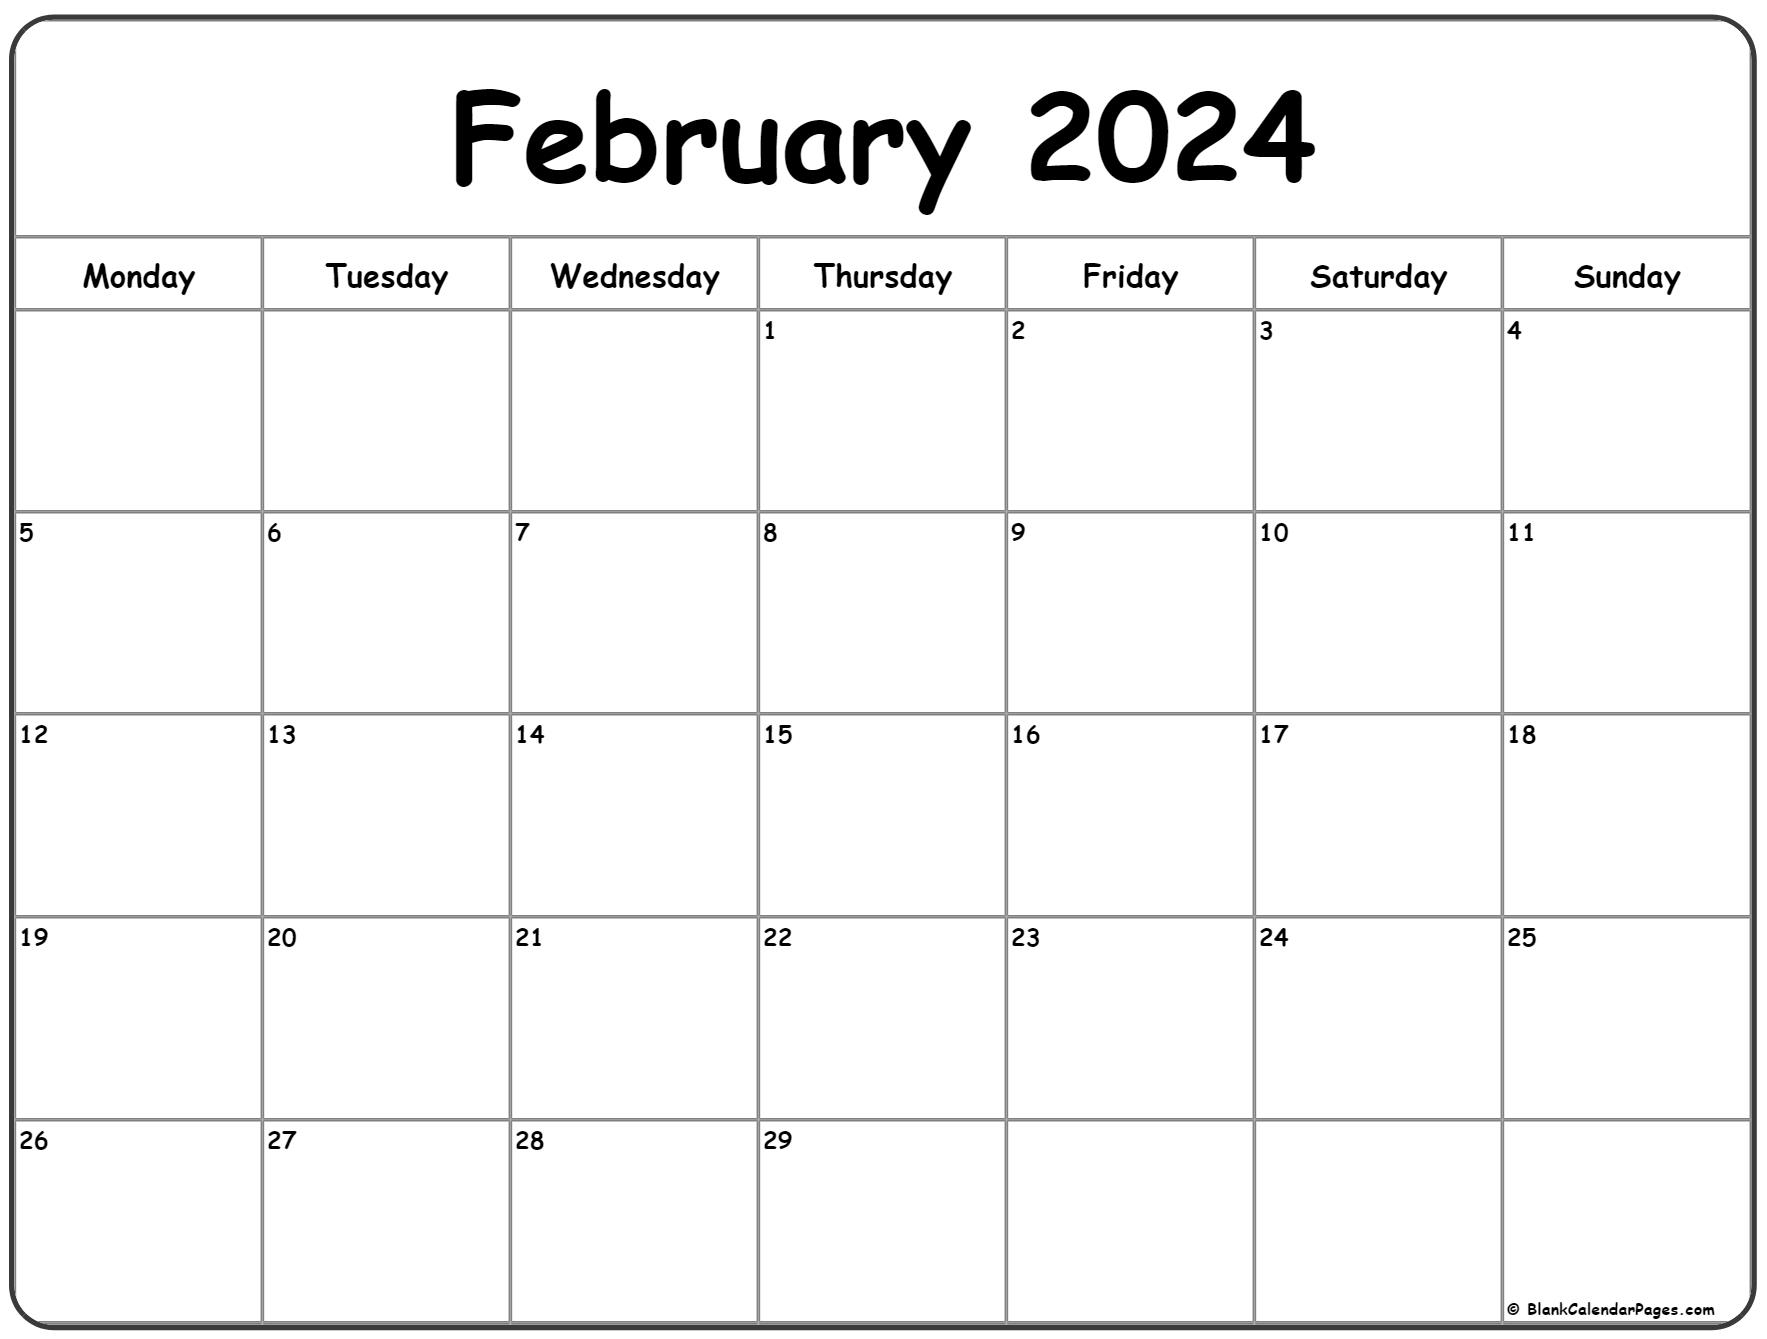 February 2024 Monday Calendar | Monday To Sunday for Calendar Feb 2024 Printable